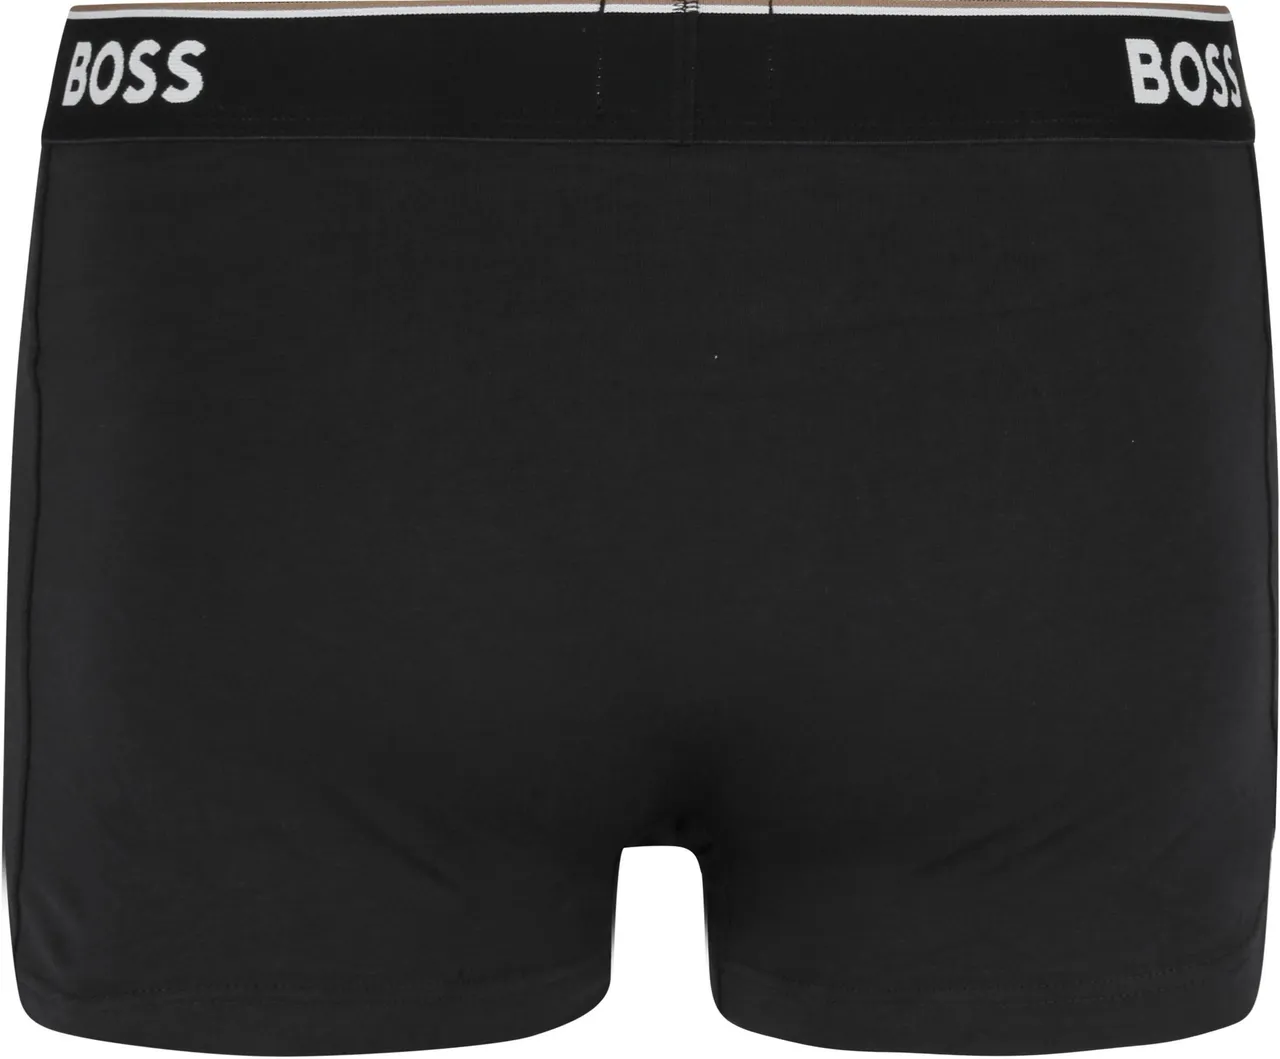 BOSS Short Boxer Shorts Power 3-Pack 061 Grey Dark Grey Multicolour Black